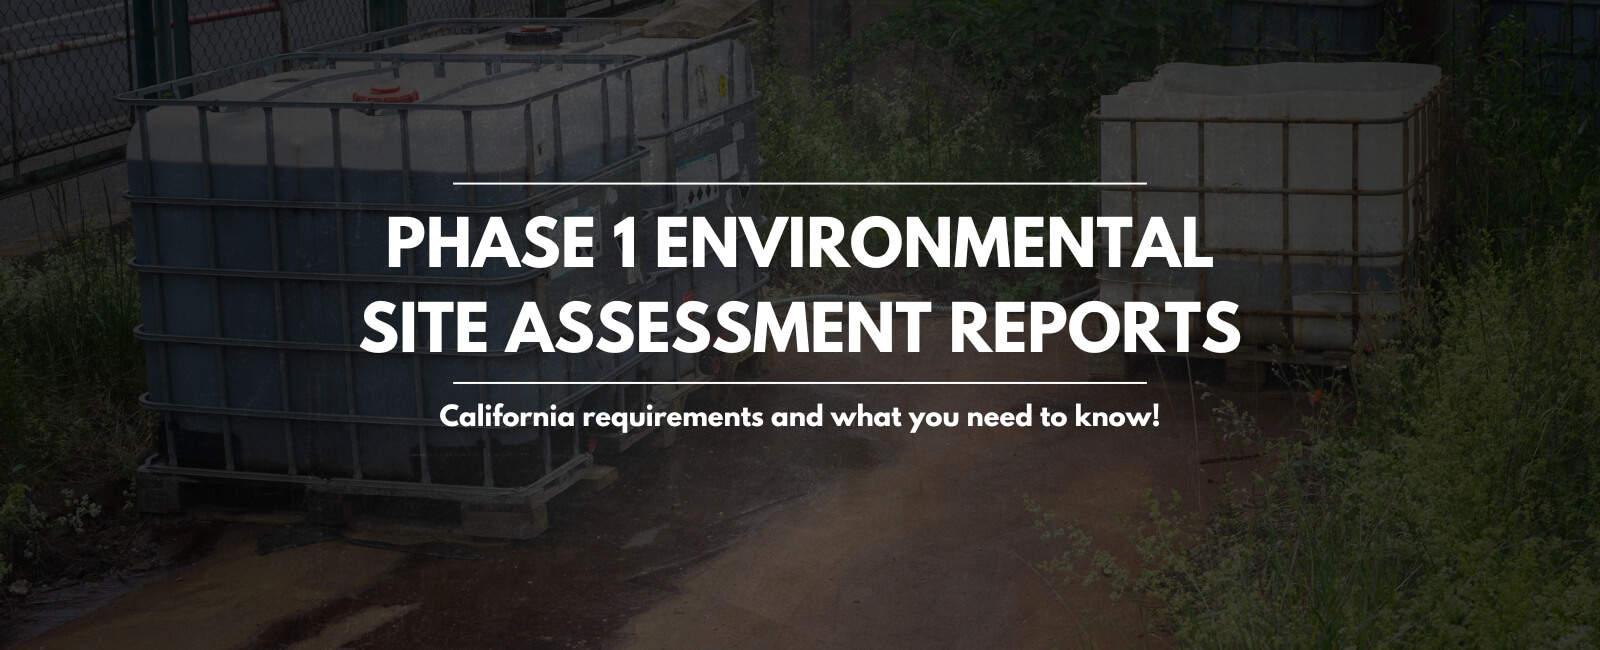 phase 1 environmental site assessment